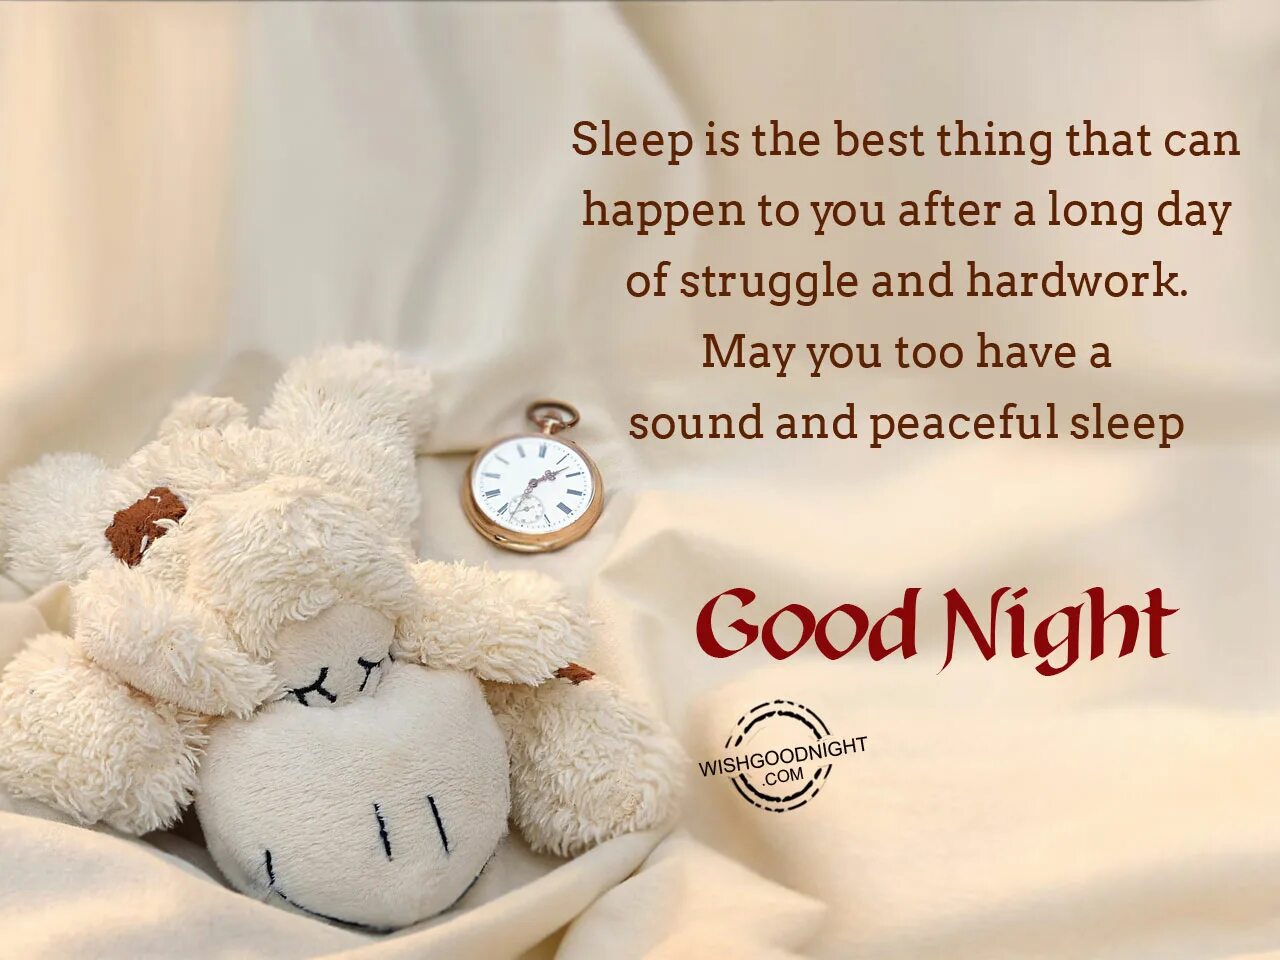 Sleep well cg5 текст. Good Night картинки. Sleep well картинки. Good Night Sleep well. Sleep well картинки good Night.